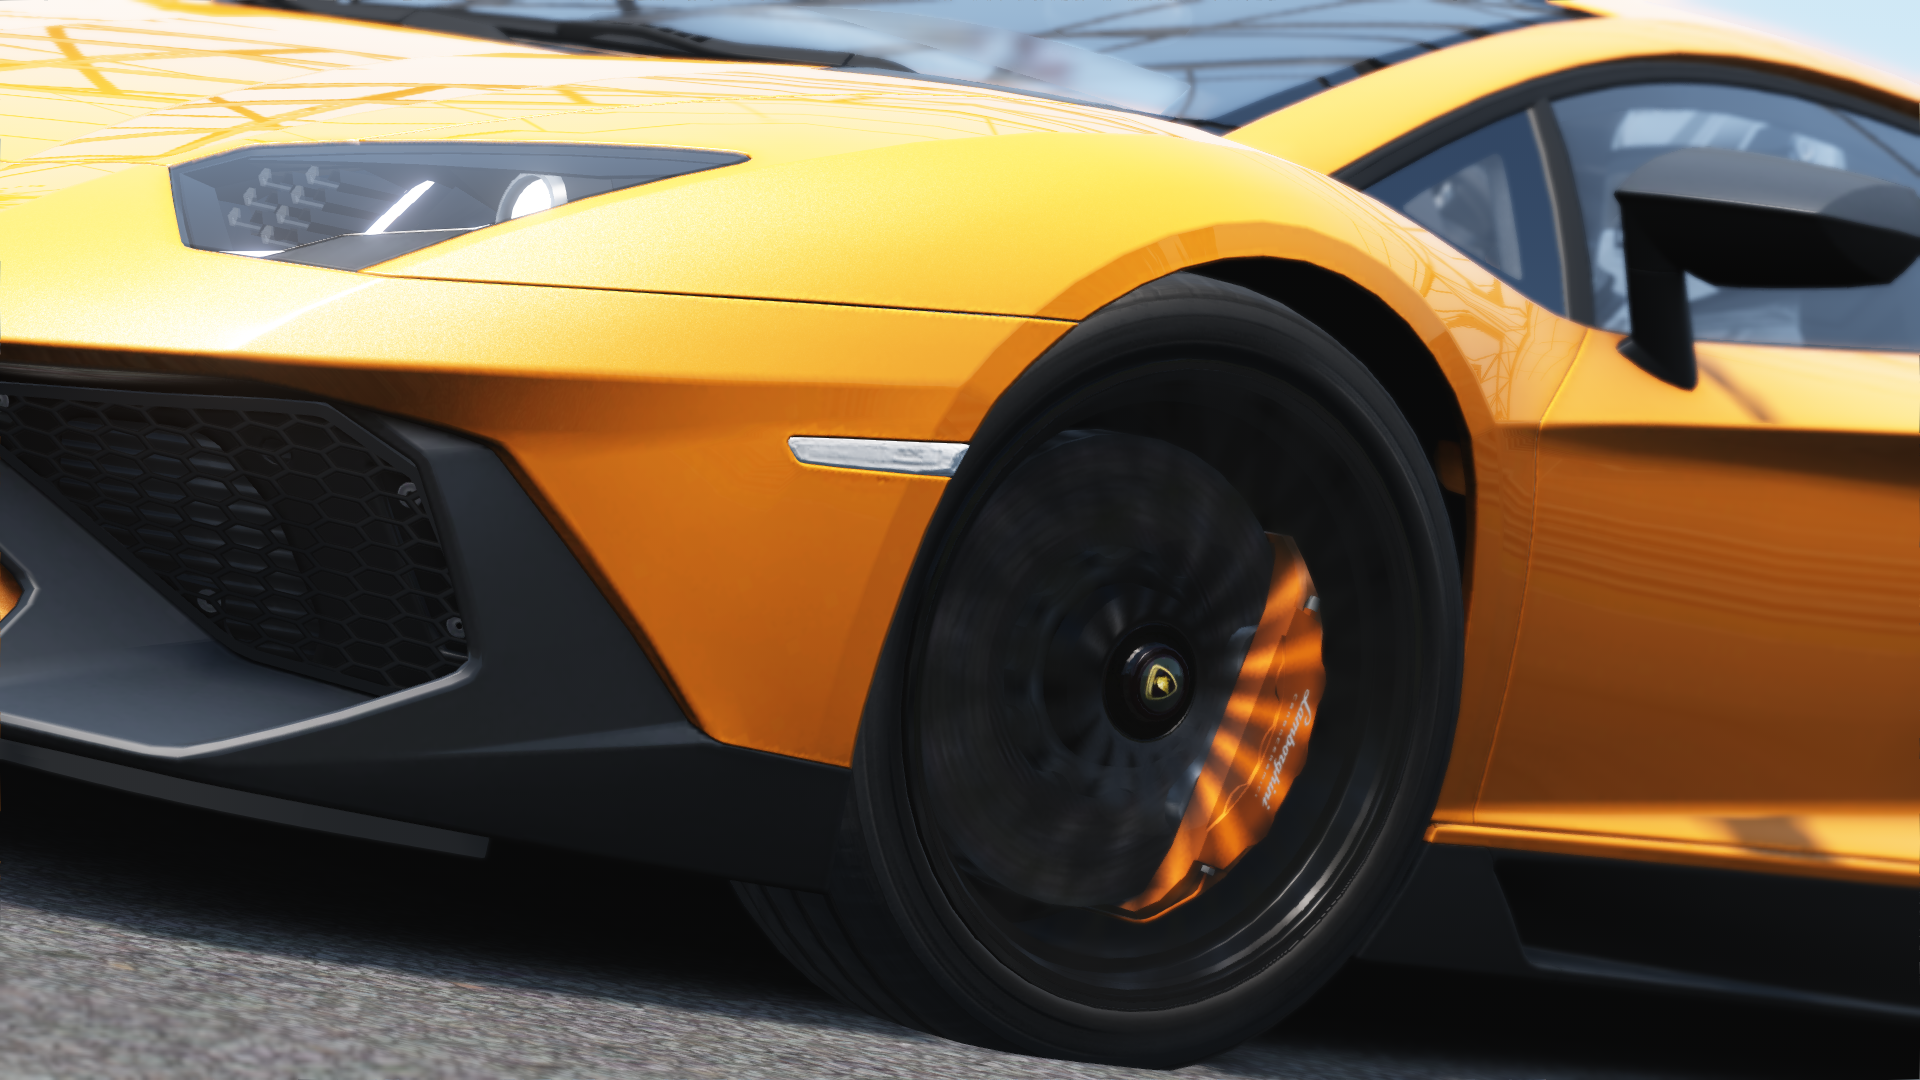 General 1920x1080 Assetto Corsa Nurburgring video games PC gaming orange cars car vehicle supercars Lamborghini Aventador Lamborghini